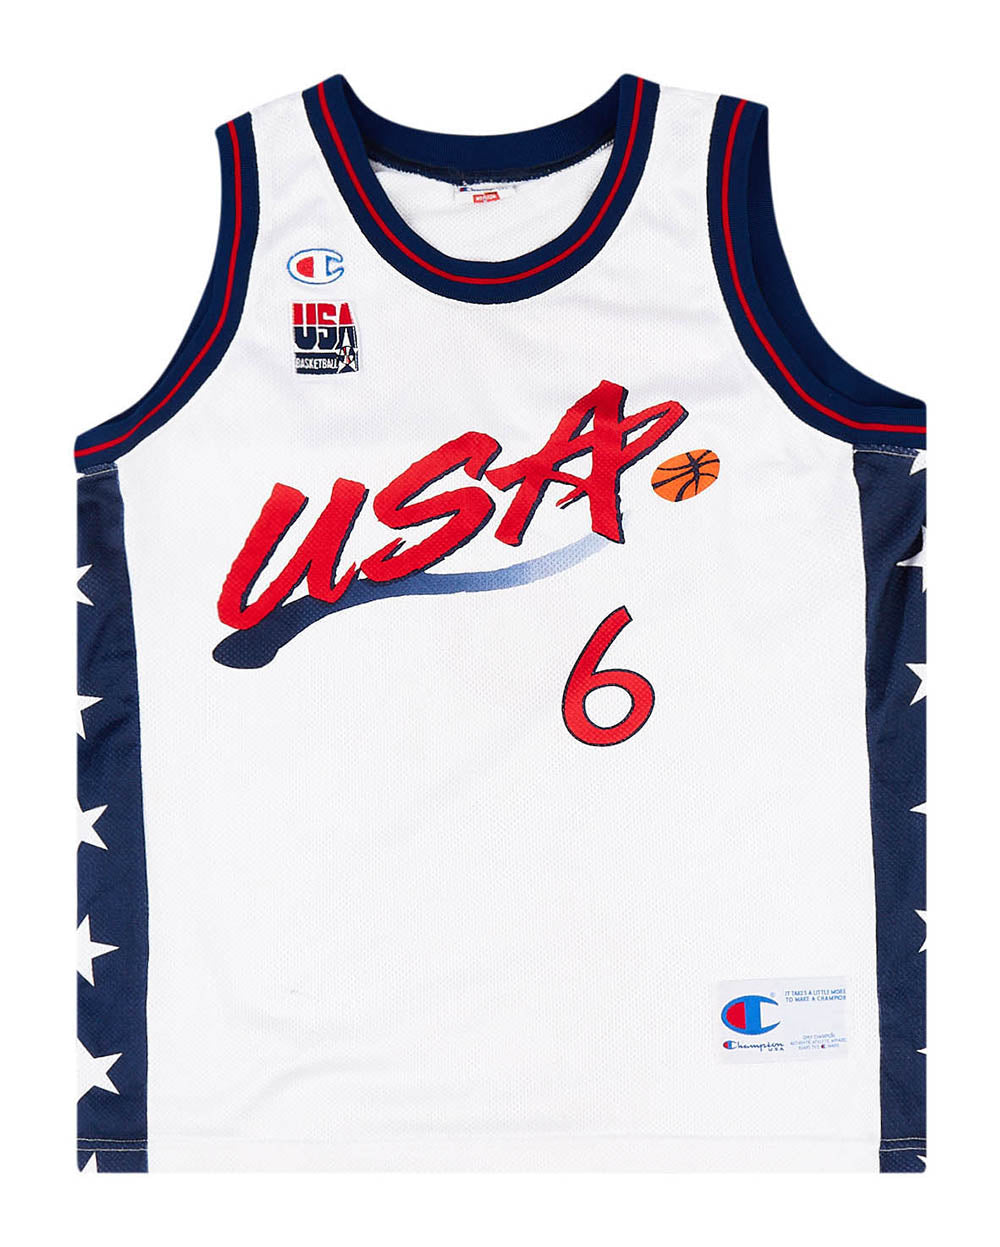 UsaVintageBarcelona Size 44. 90s Vintage USA Team #6 Hardaway NBA Jersey Made in USA by Champion